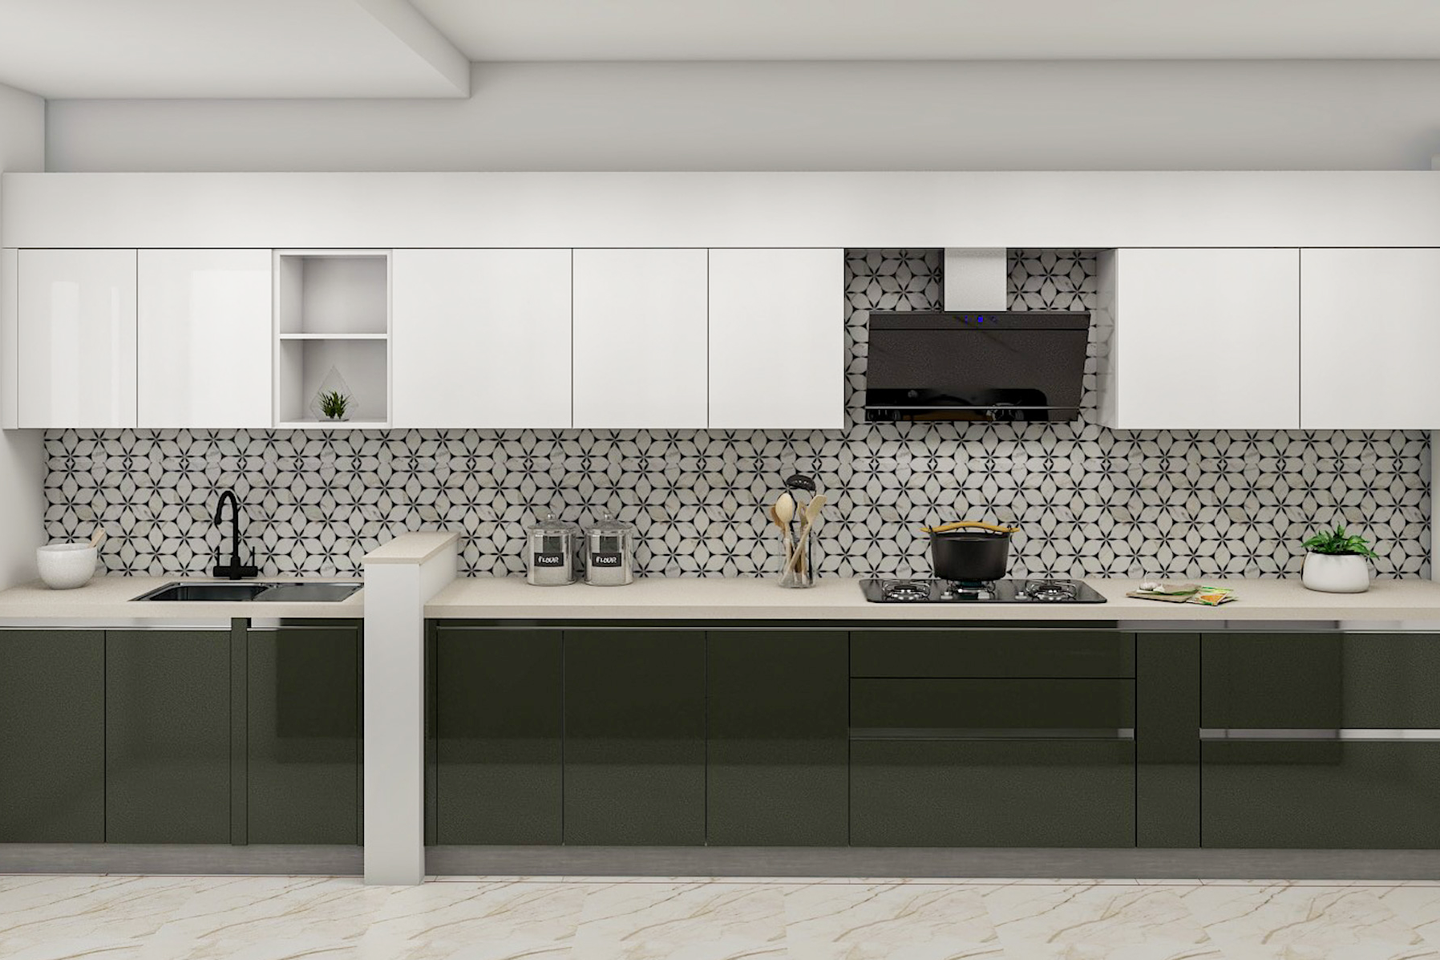 Kitchen Design With Dado Tiles - Livspace